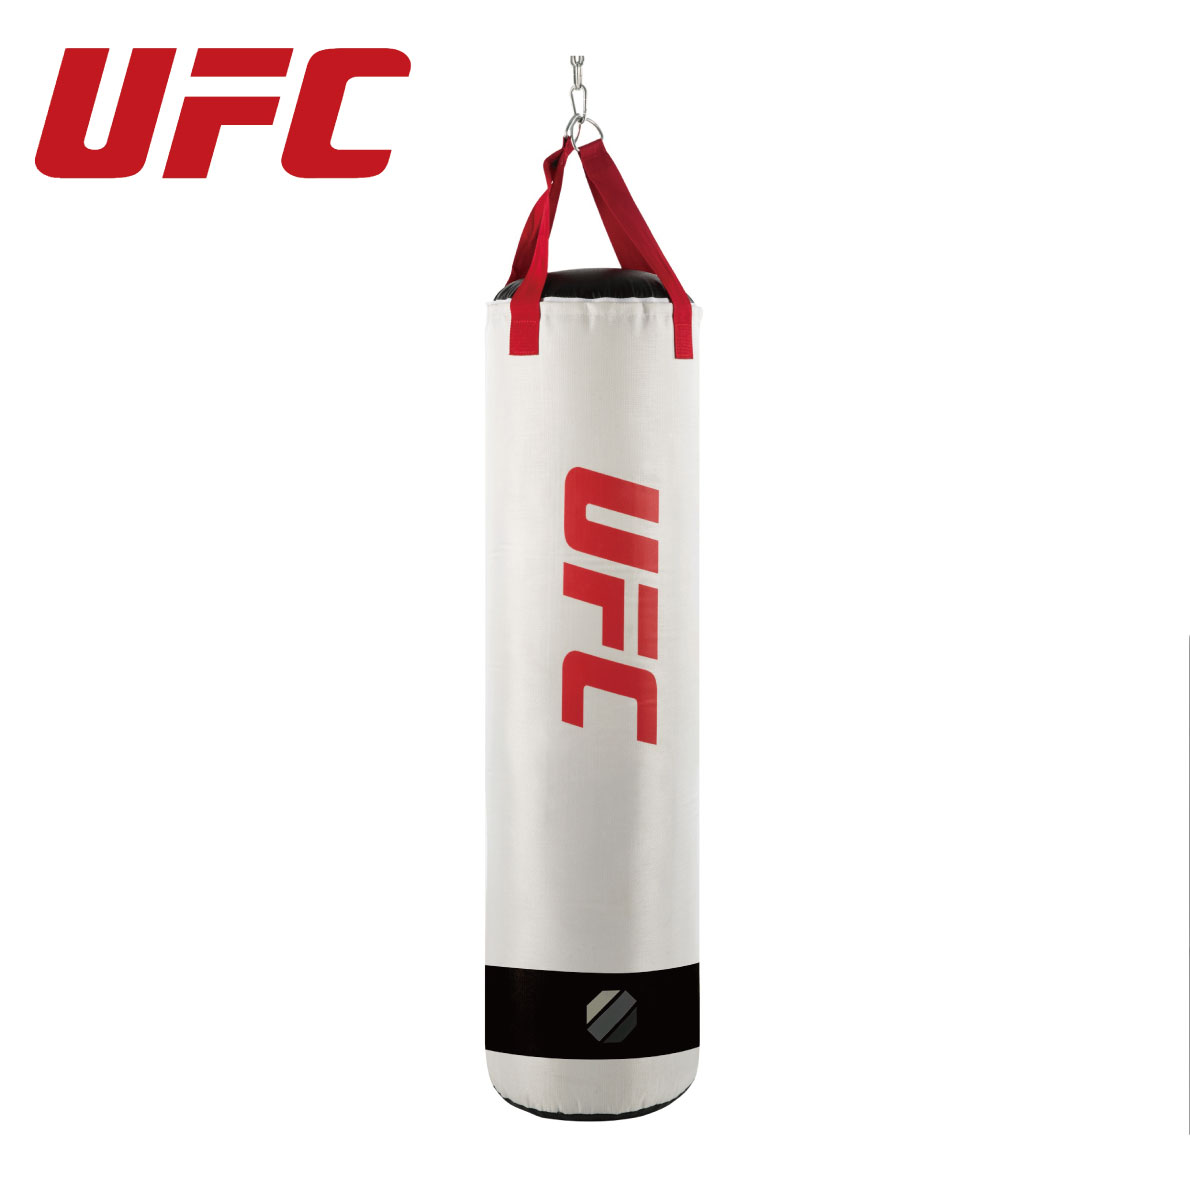 UFC MMA ヘビーバッグ サンドバッグ 46kg 100L 総合格闘技 オフィシャル パンチングバッグ 吊り下げ型 UHK-69748 ボクシング  キックボクシング 空手 | アイフィットネスショップ